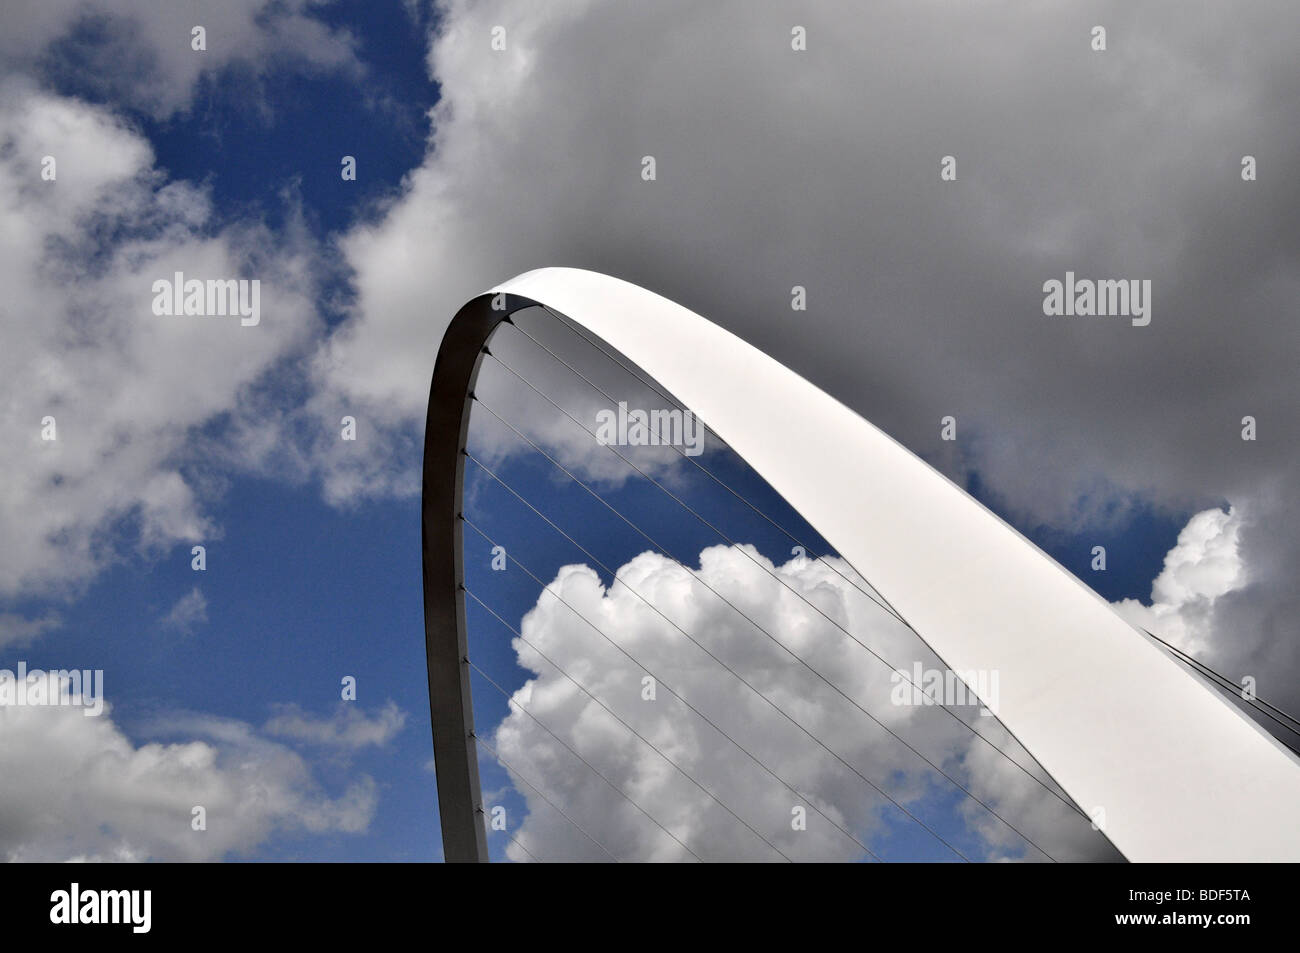 Millennium bridge gateshead lampeggiante occhio baltic square Newcastle upon Tyne, Quayside Foto Stock